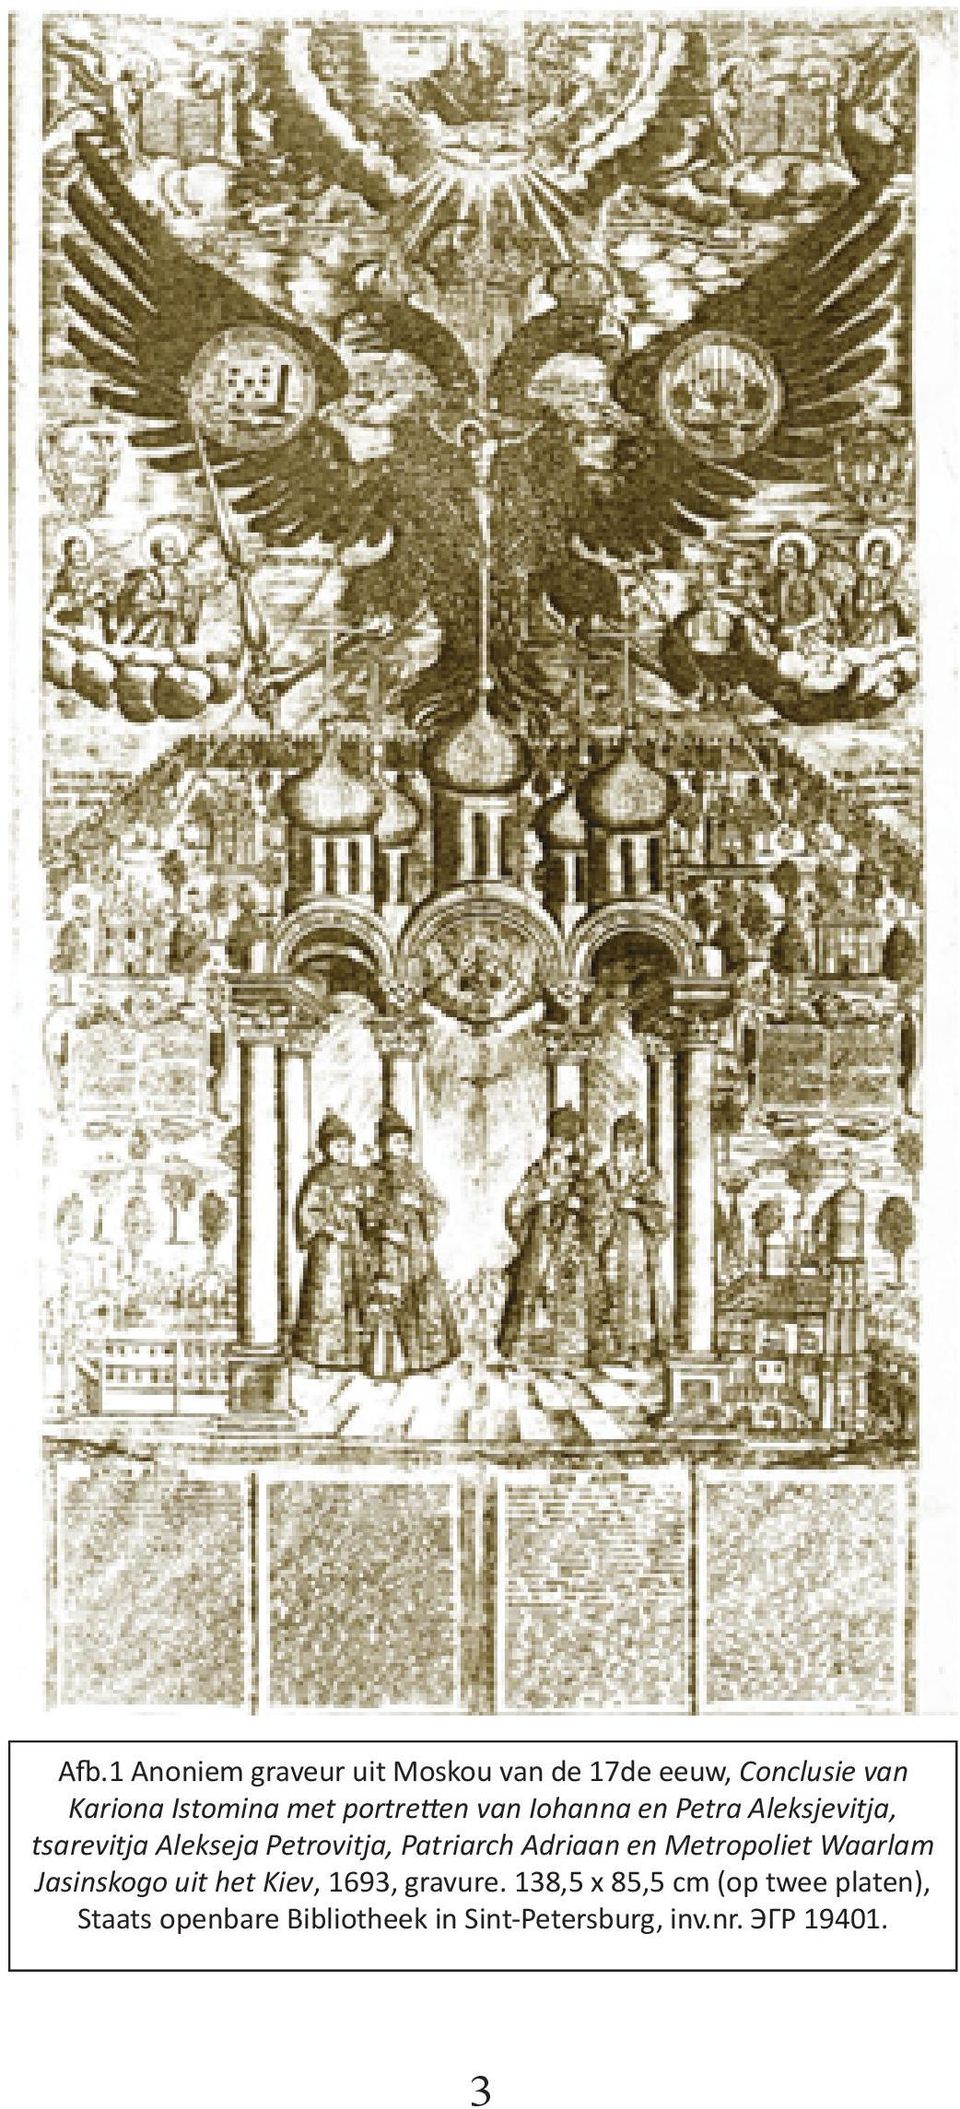 Patriarch Adriaan en Metropoliet Waarlam Jasinskogo uit het Kiev, 1693, gravure.